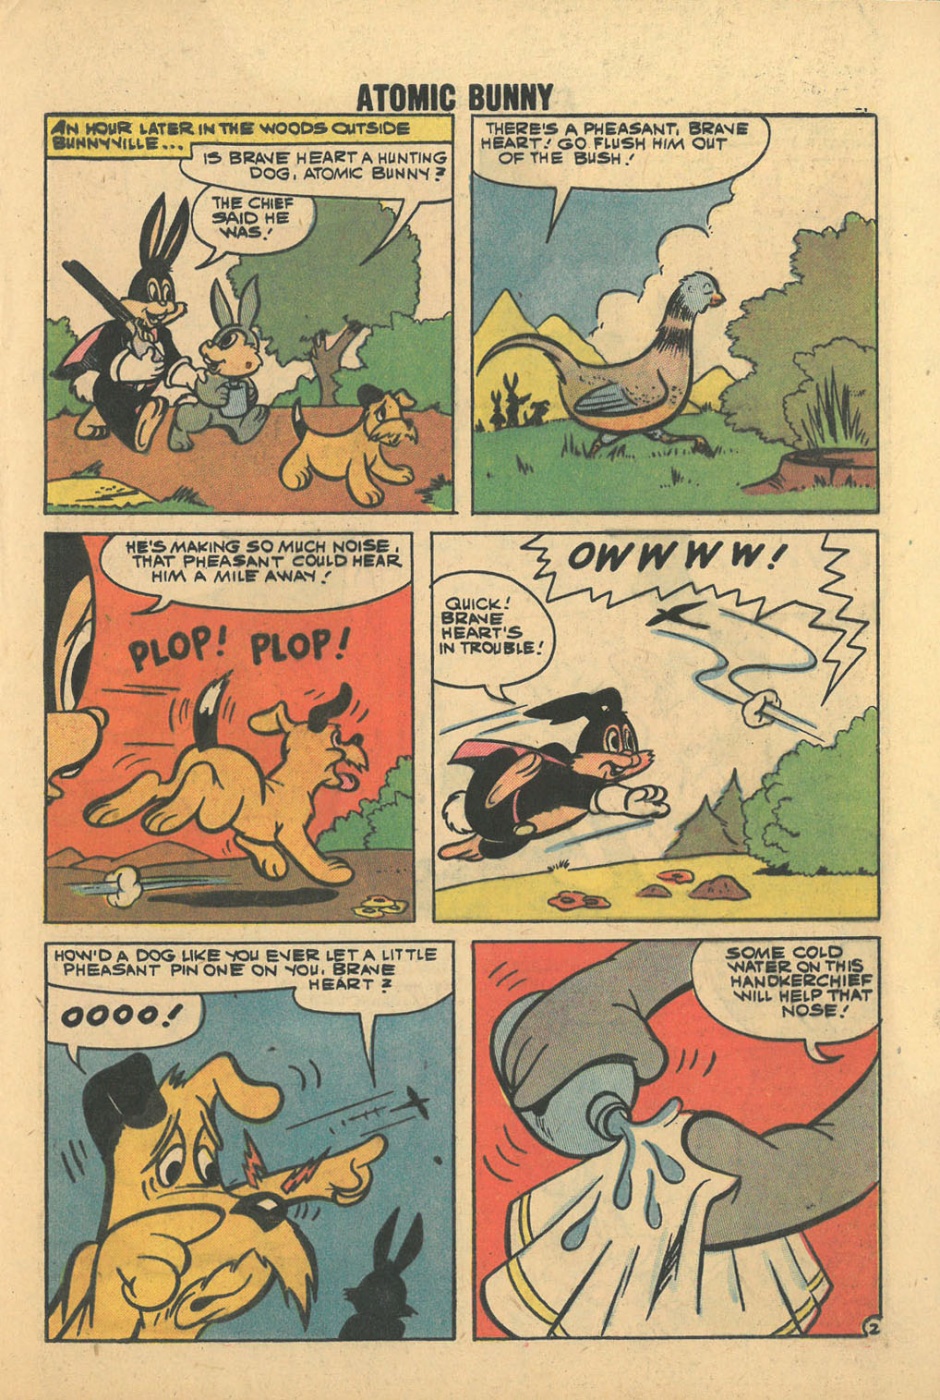 Atomic-Bunny-Comic-Strips (b) (28)